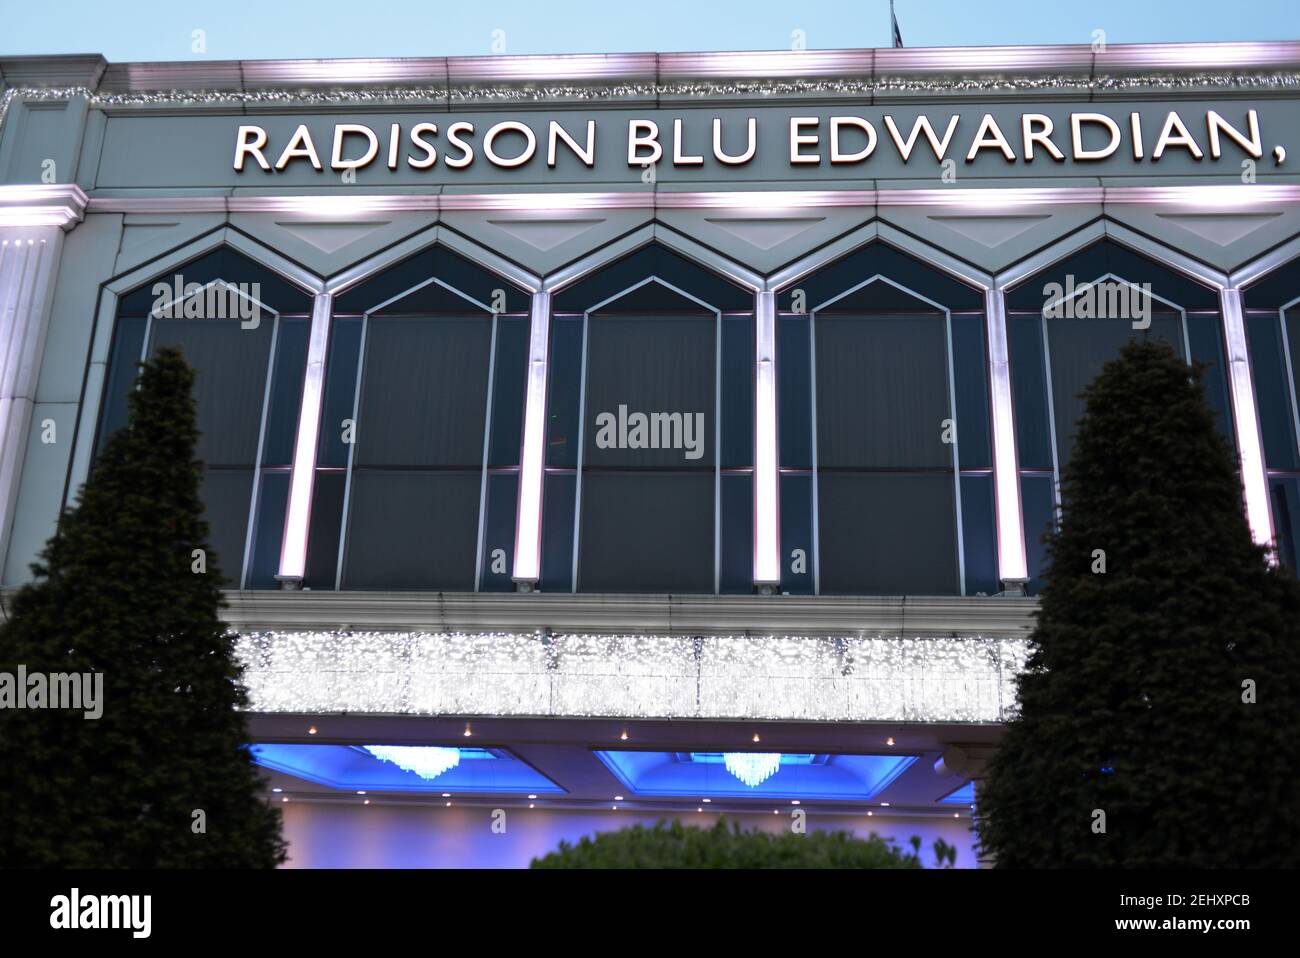 Radisson Blu Edwardian Hotel and Conference Centre, Heathrow Airport, London, England Stock Photo